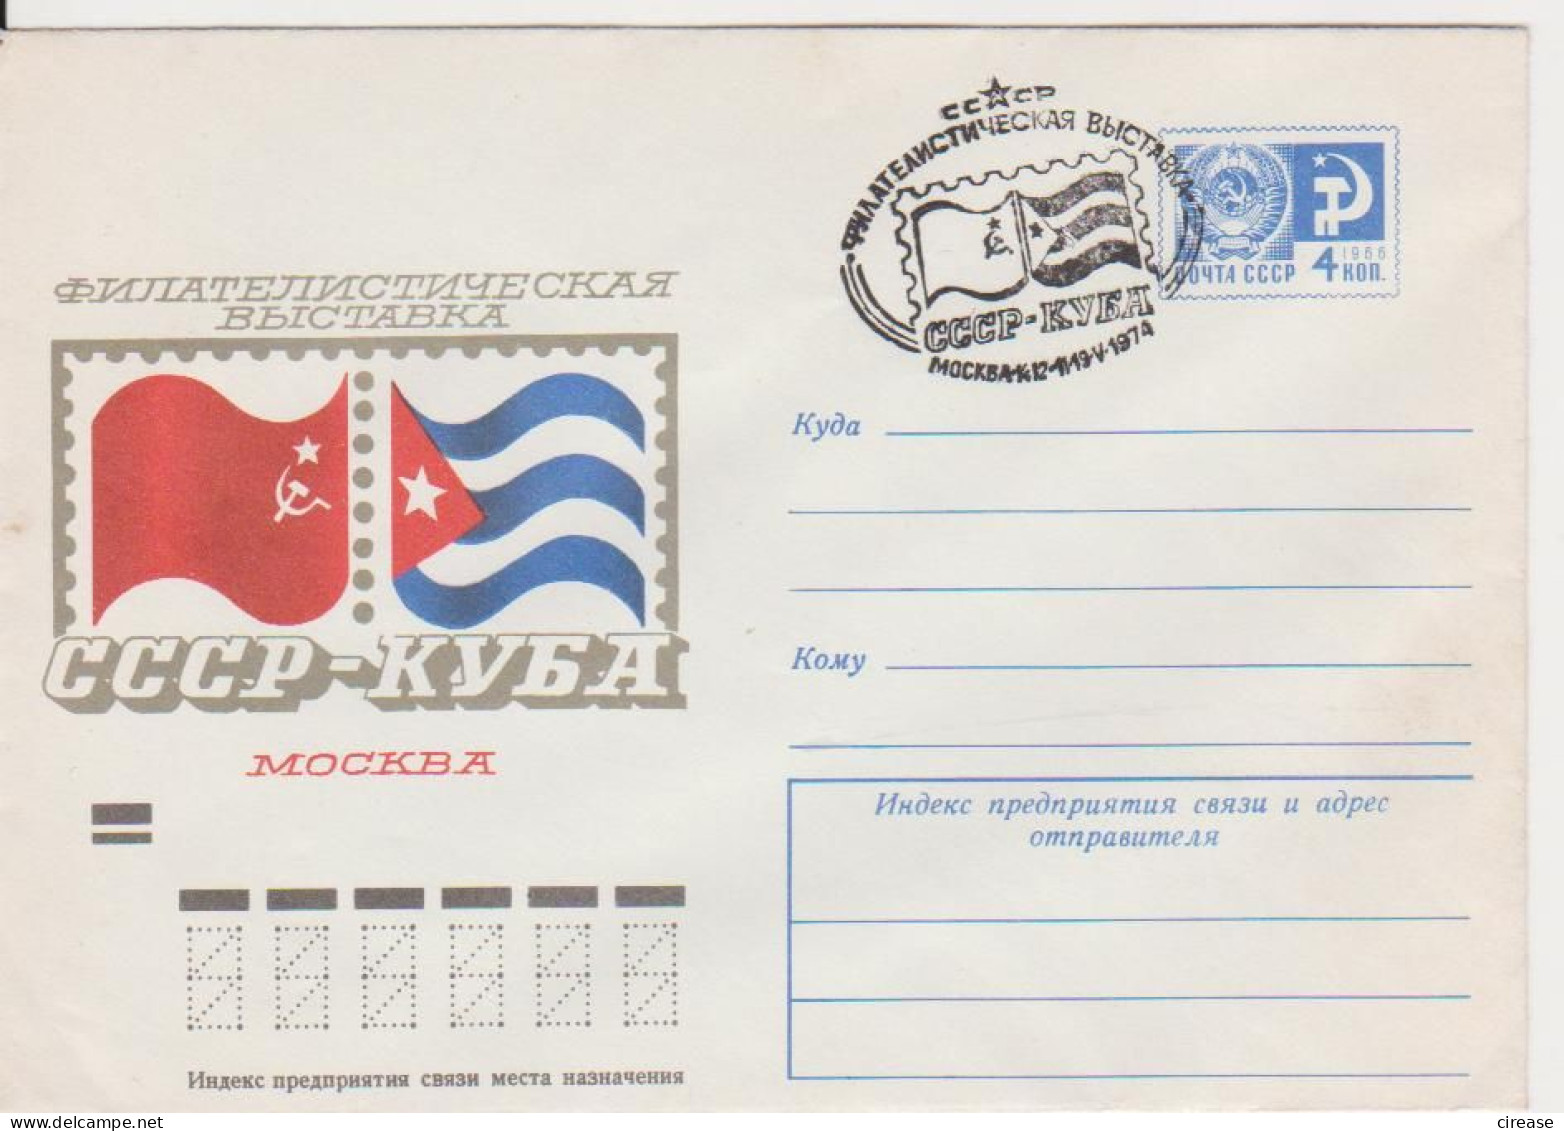 FLAGS. RUSSIAN CUBA FRIENDSHIP RUSSIA CCCP URSS POSTAL STATIONERY - Buste